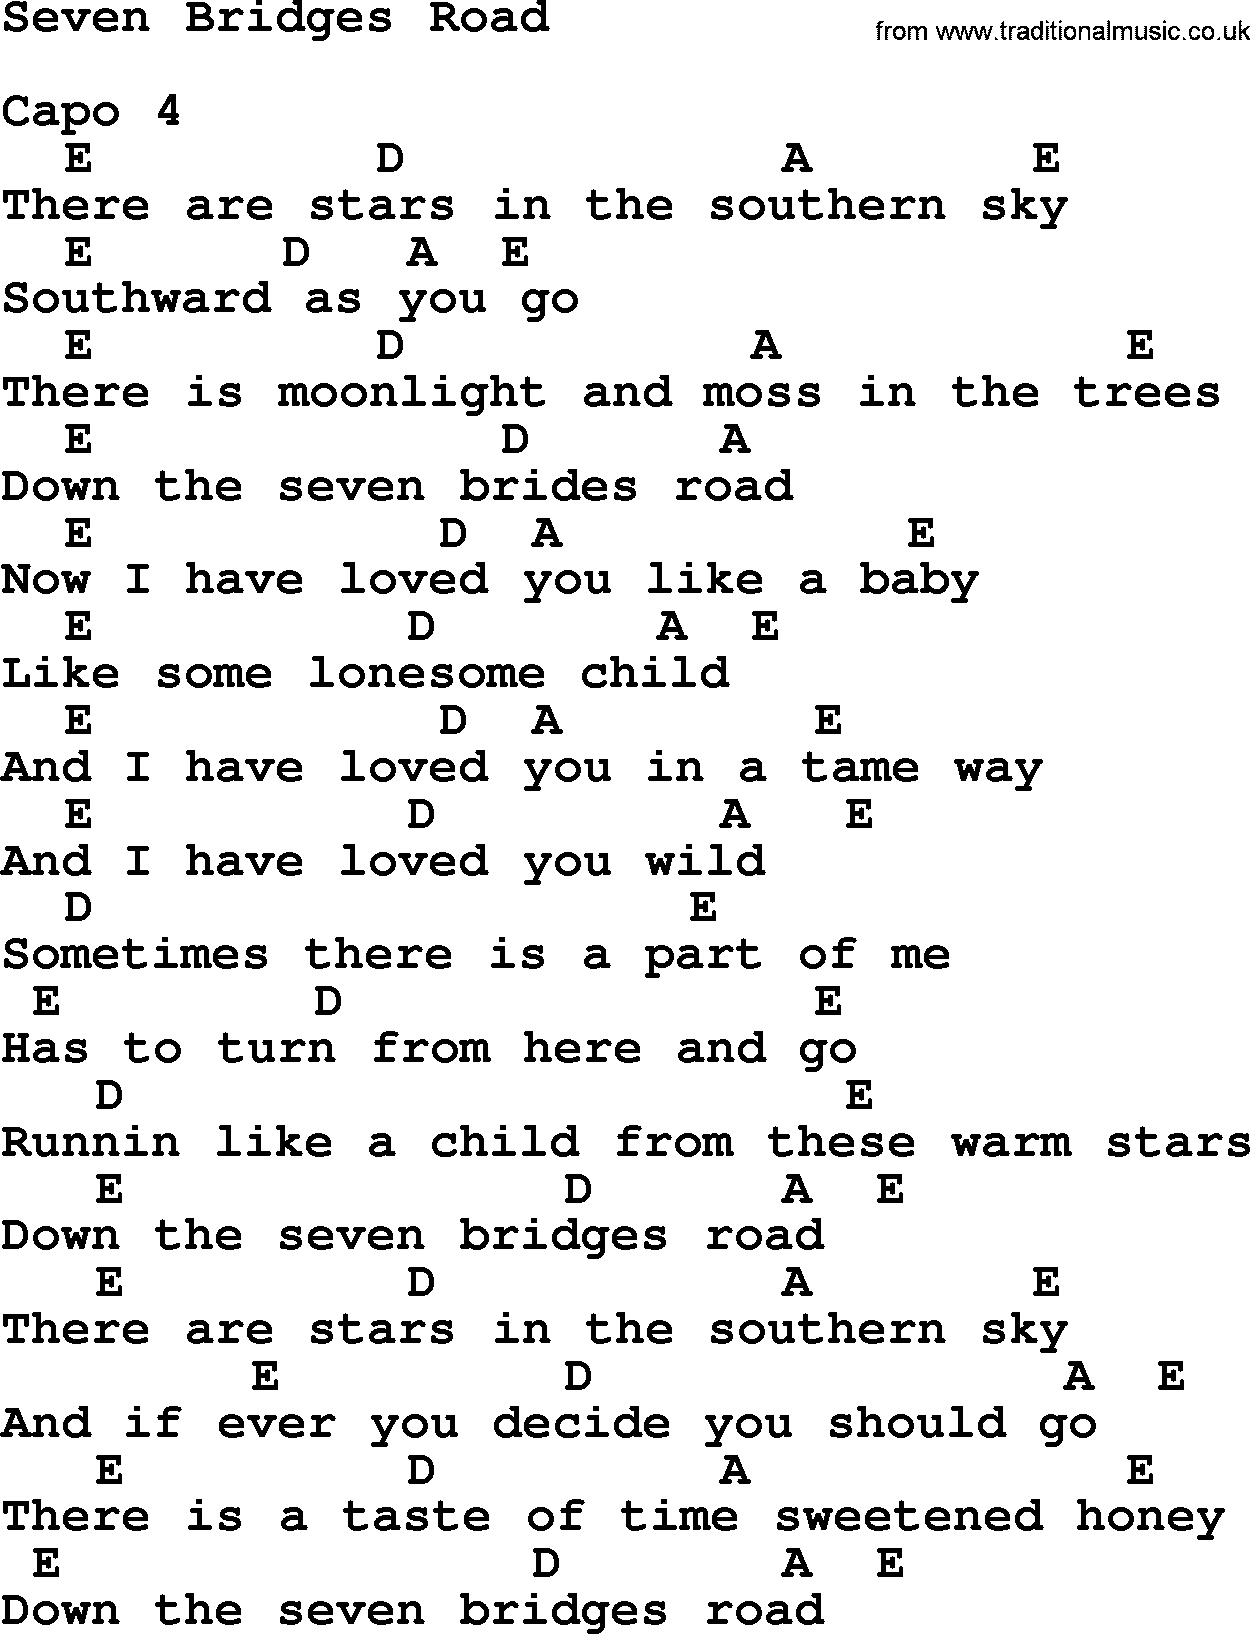 Dolly Parton song Seven Bridges Road, lyrics and chords